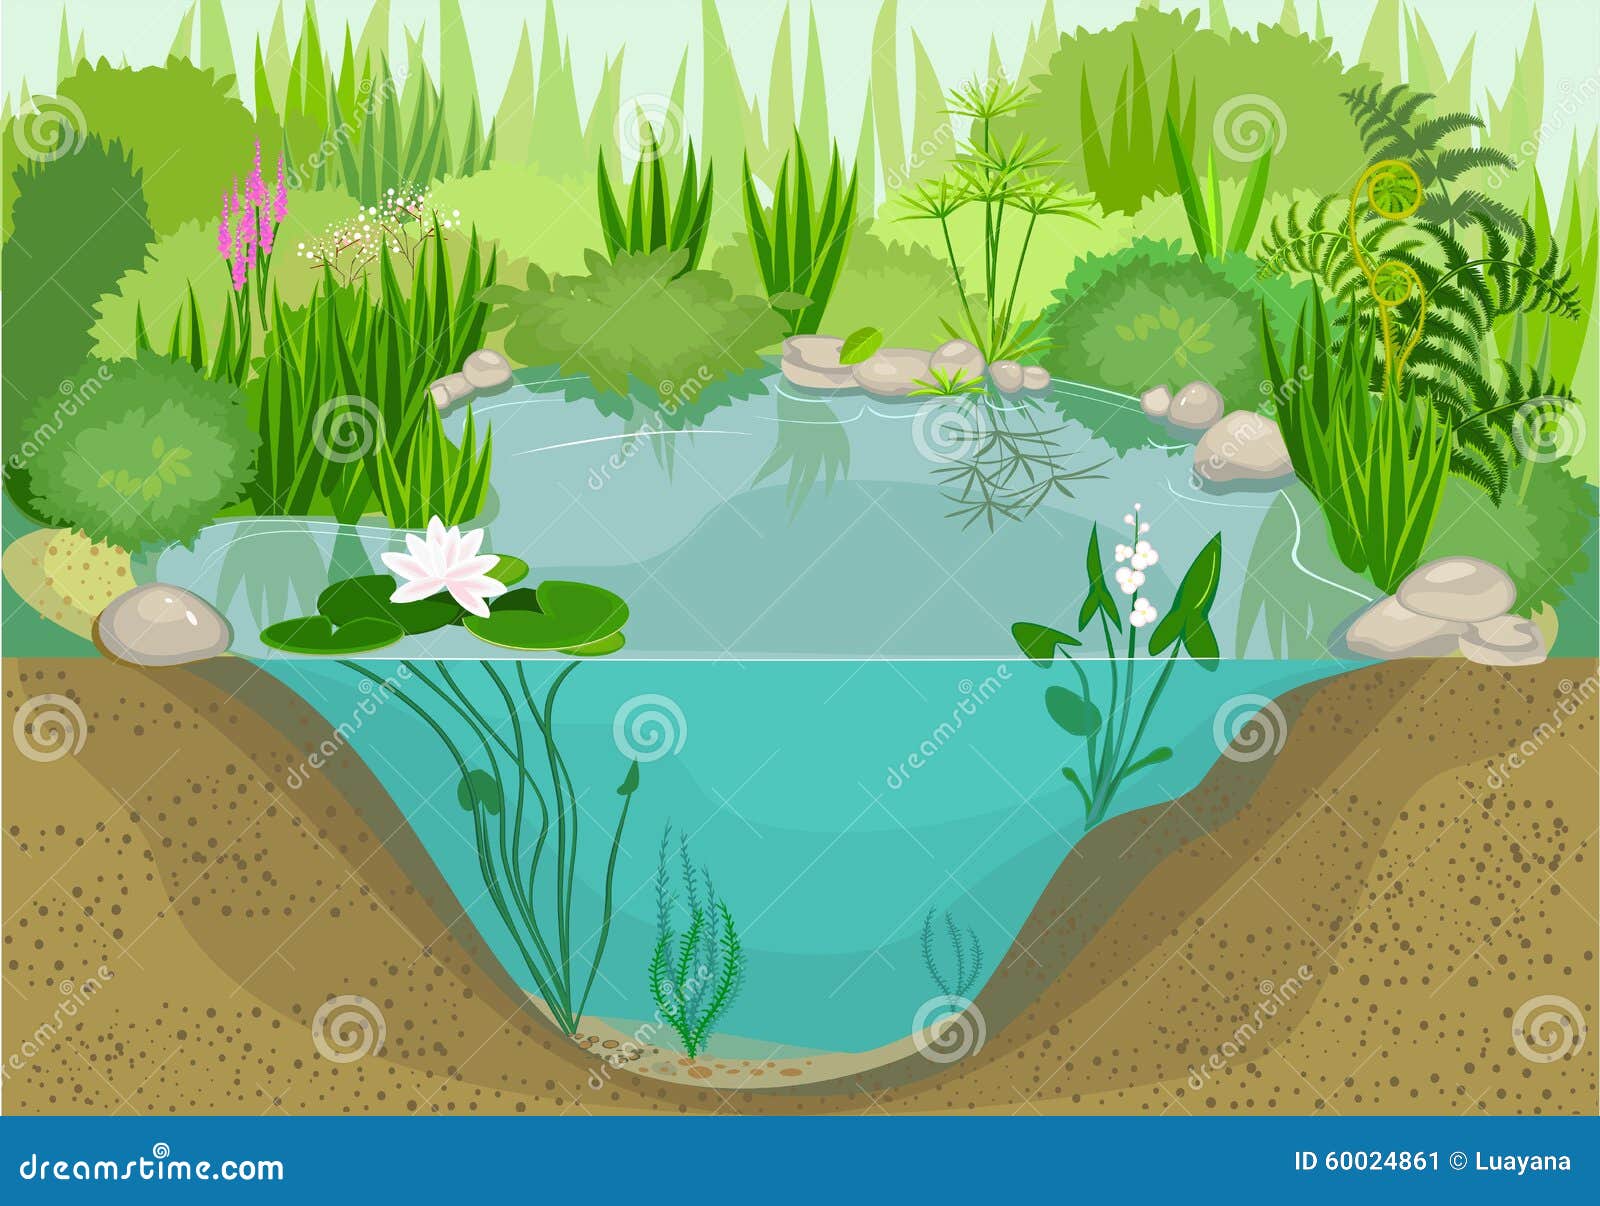 Pond stock vector. Illustration of cartoon, amphibious - 59091598